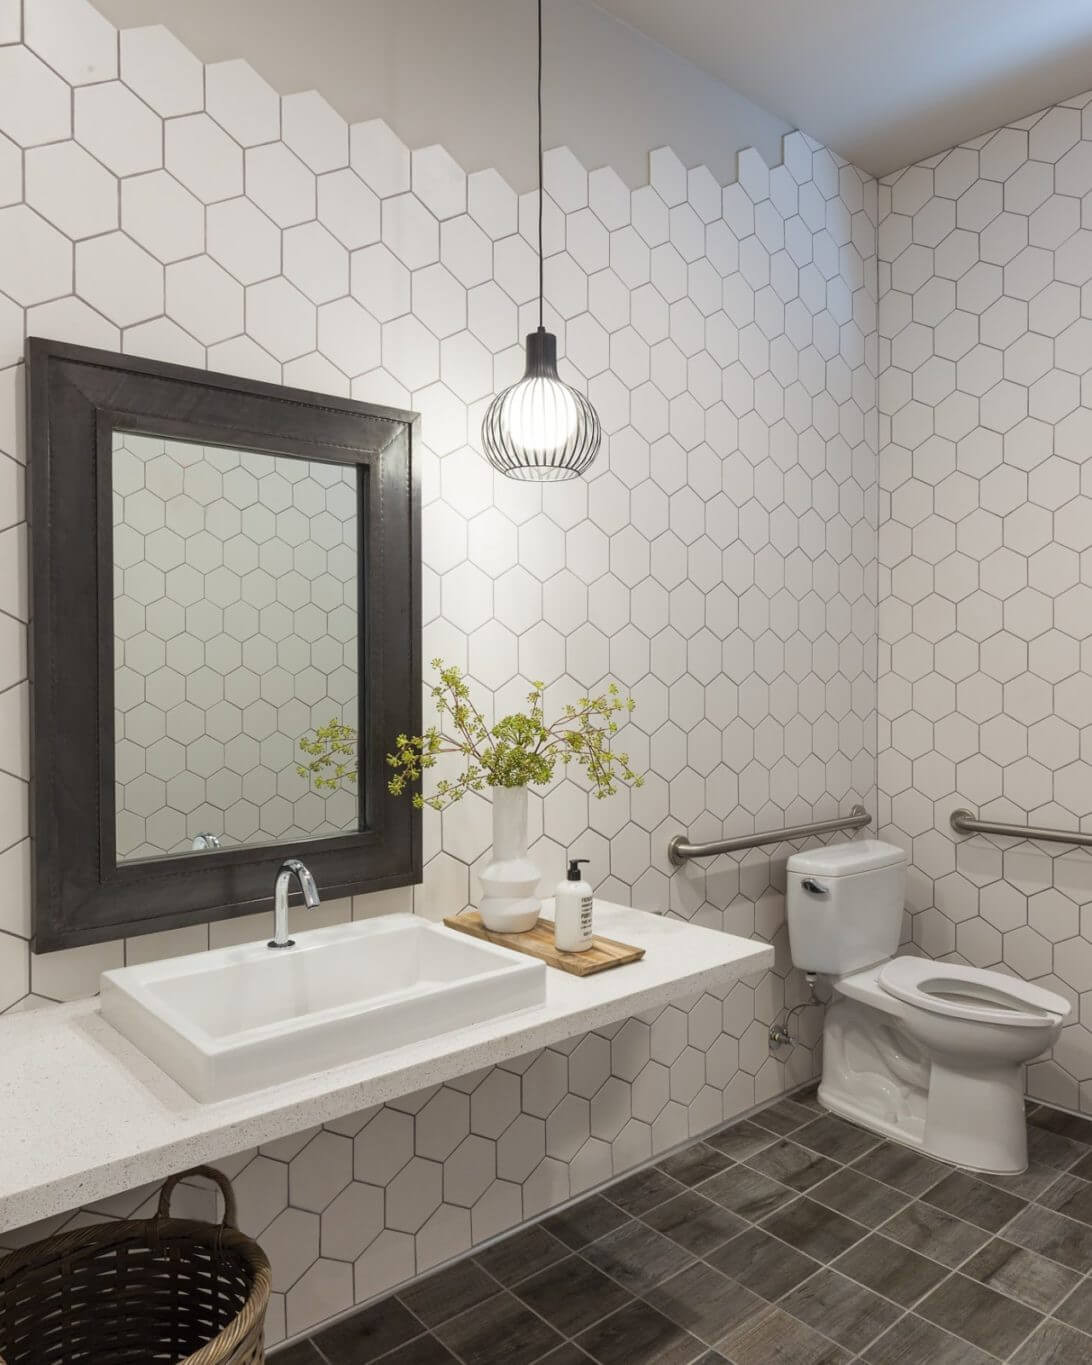 Wall Tile Bathroom
 Your plete Guide to Bathroom Tile